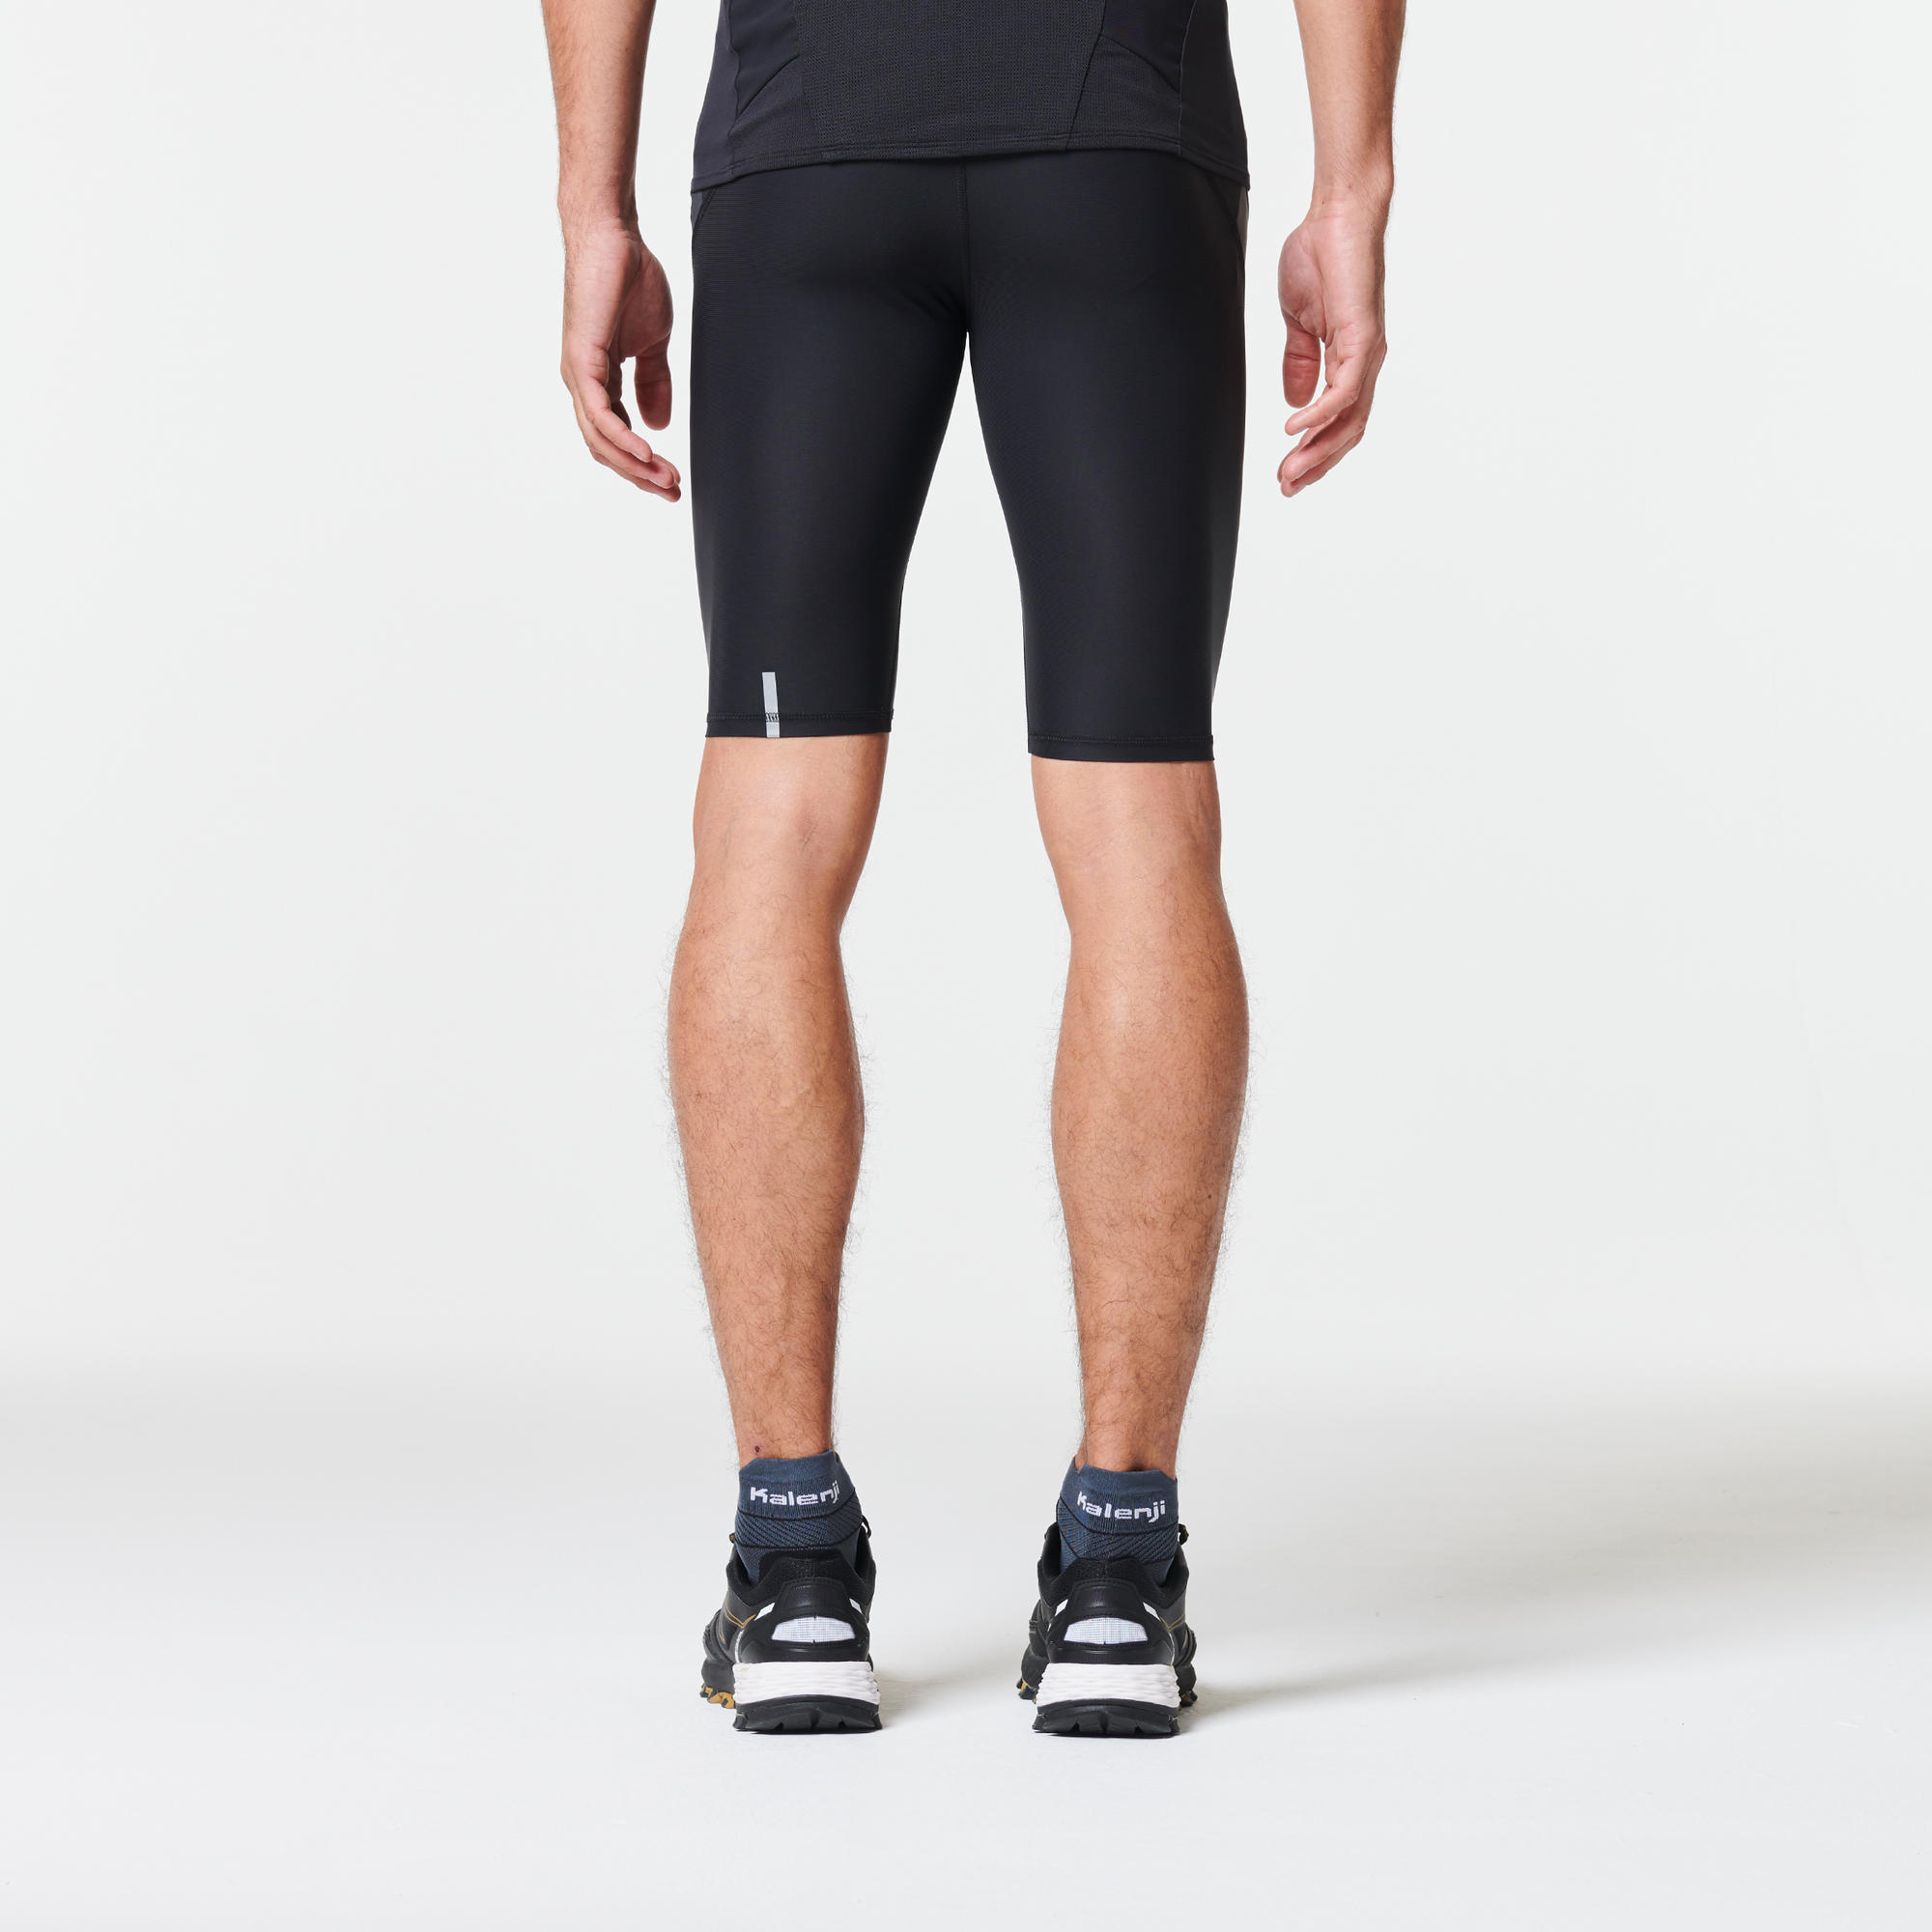 mens running compression shorts